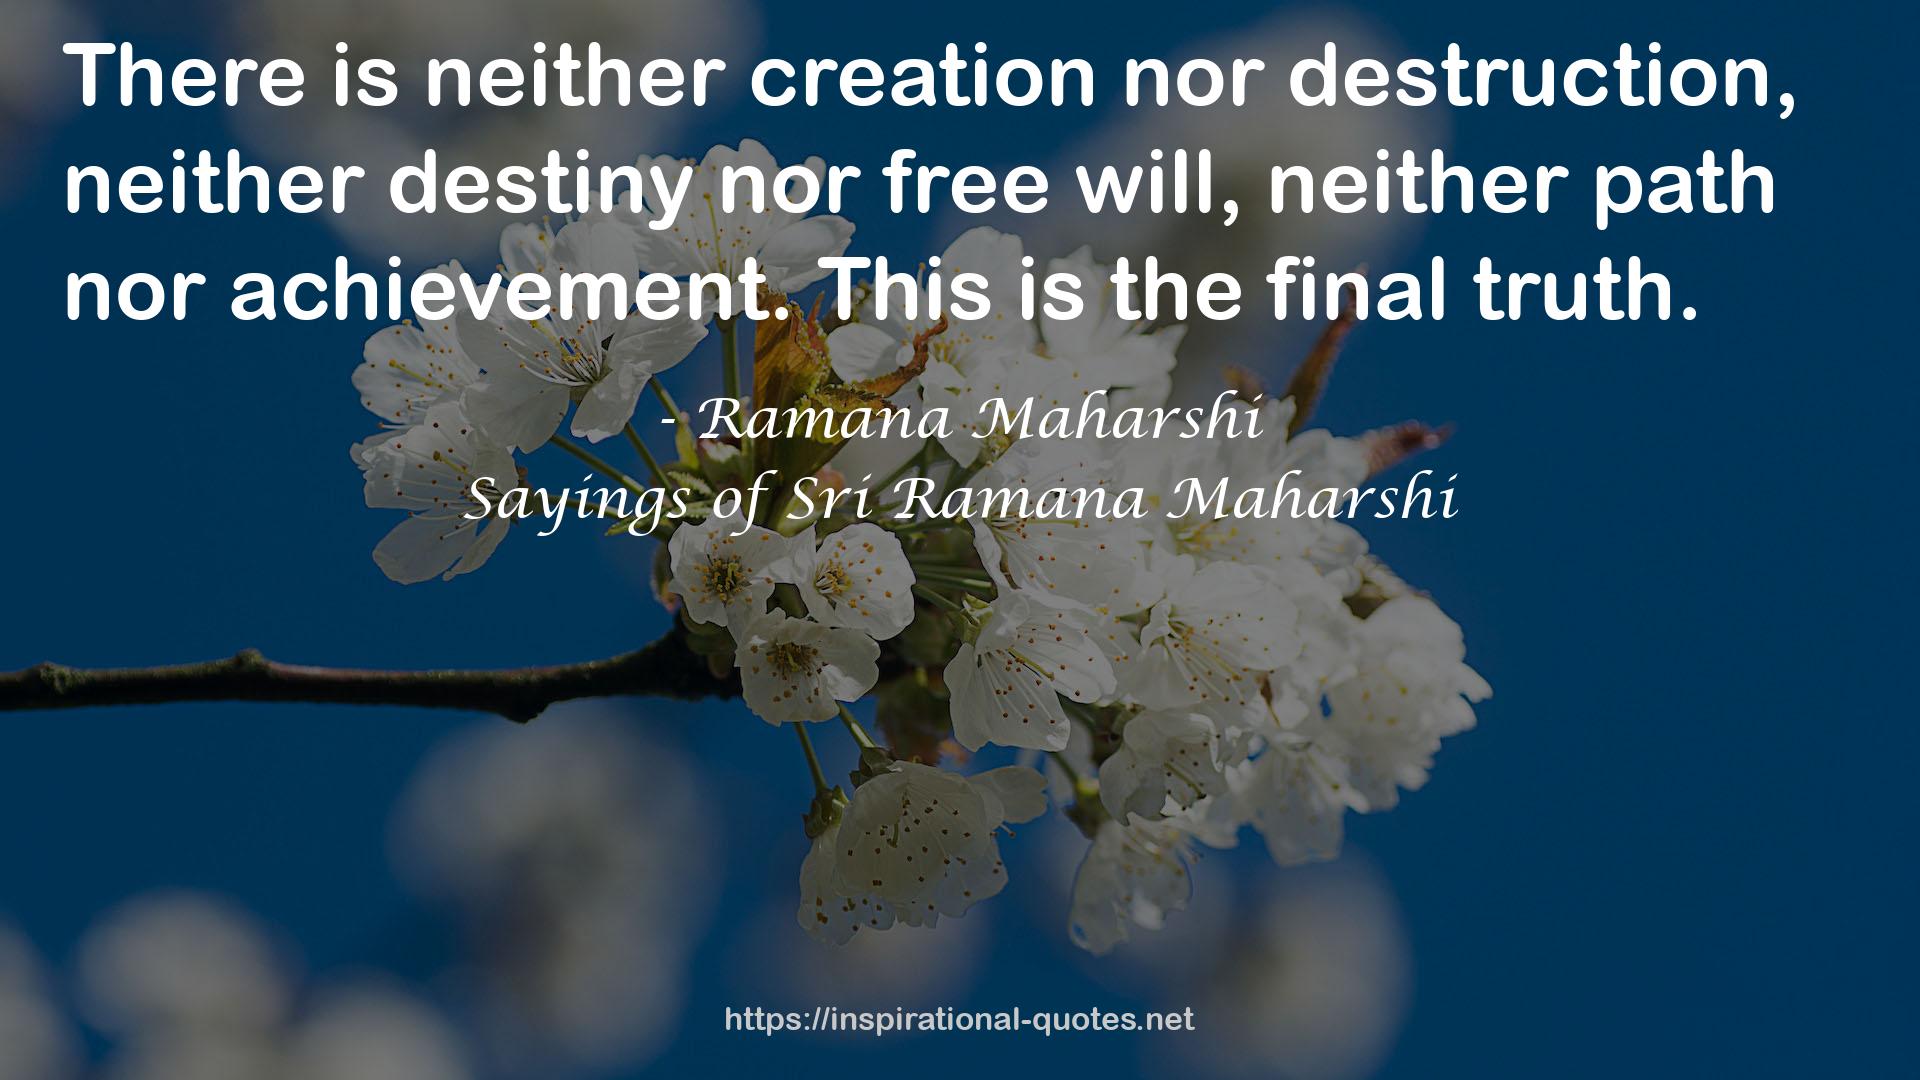 Sayings of Sri Ramana Maharshi QUOTES